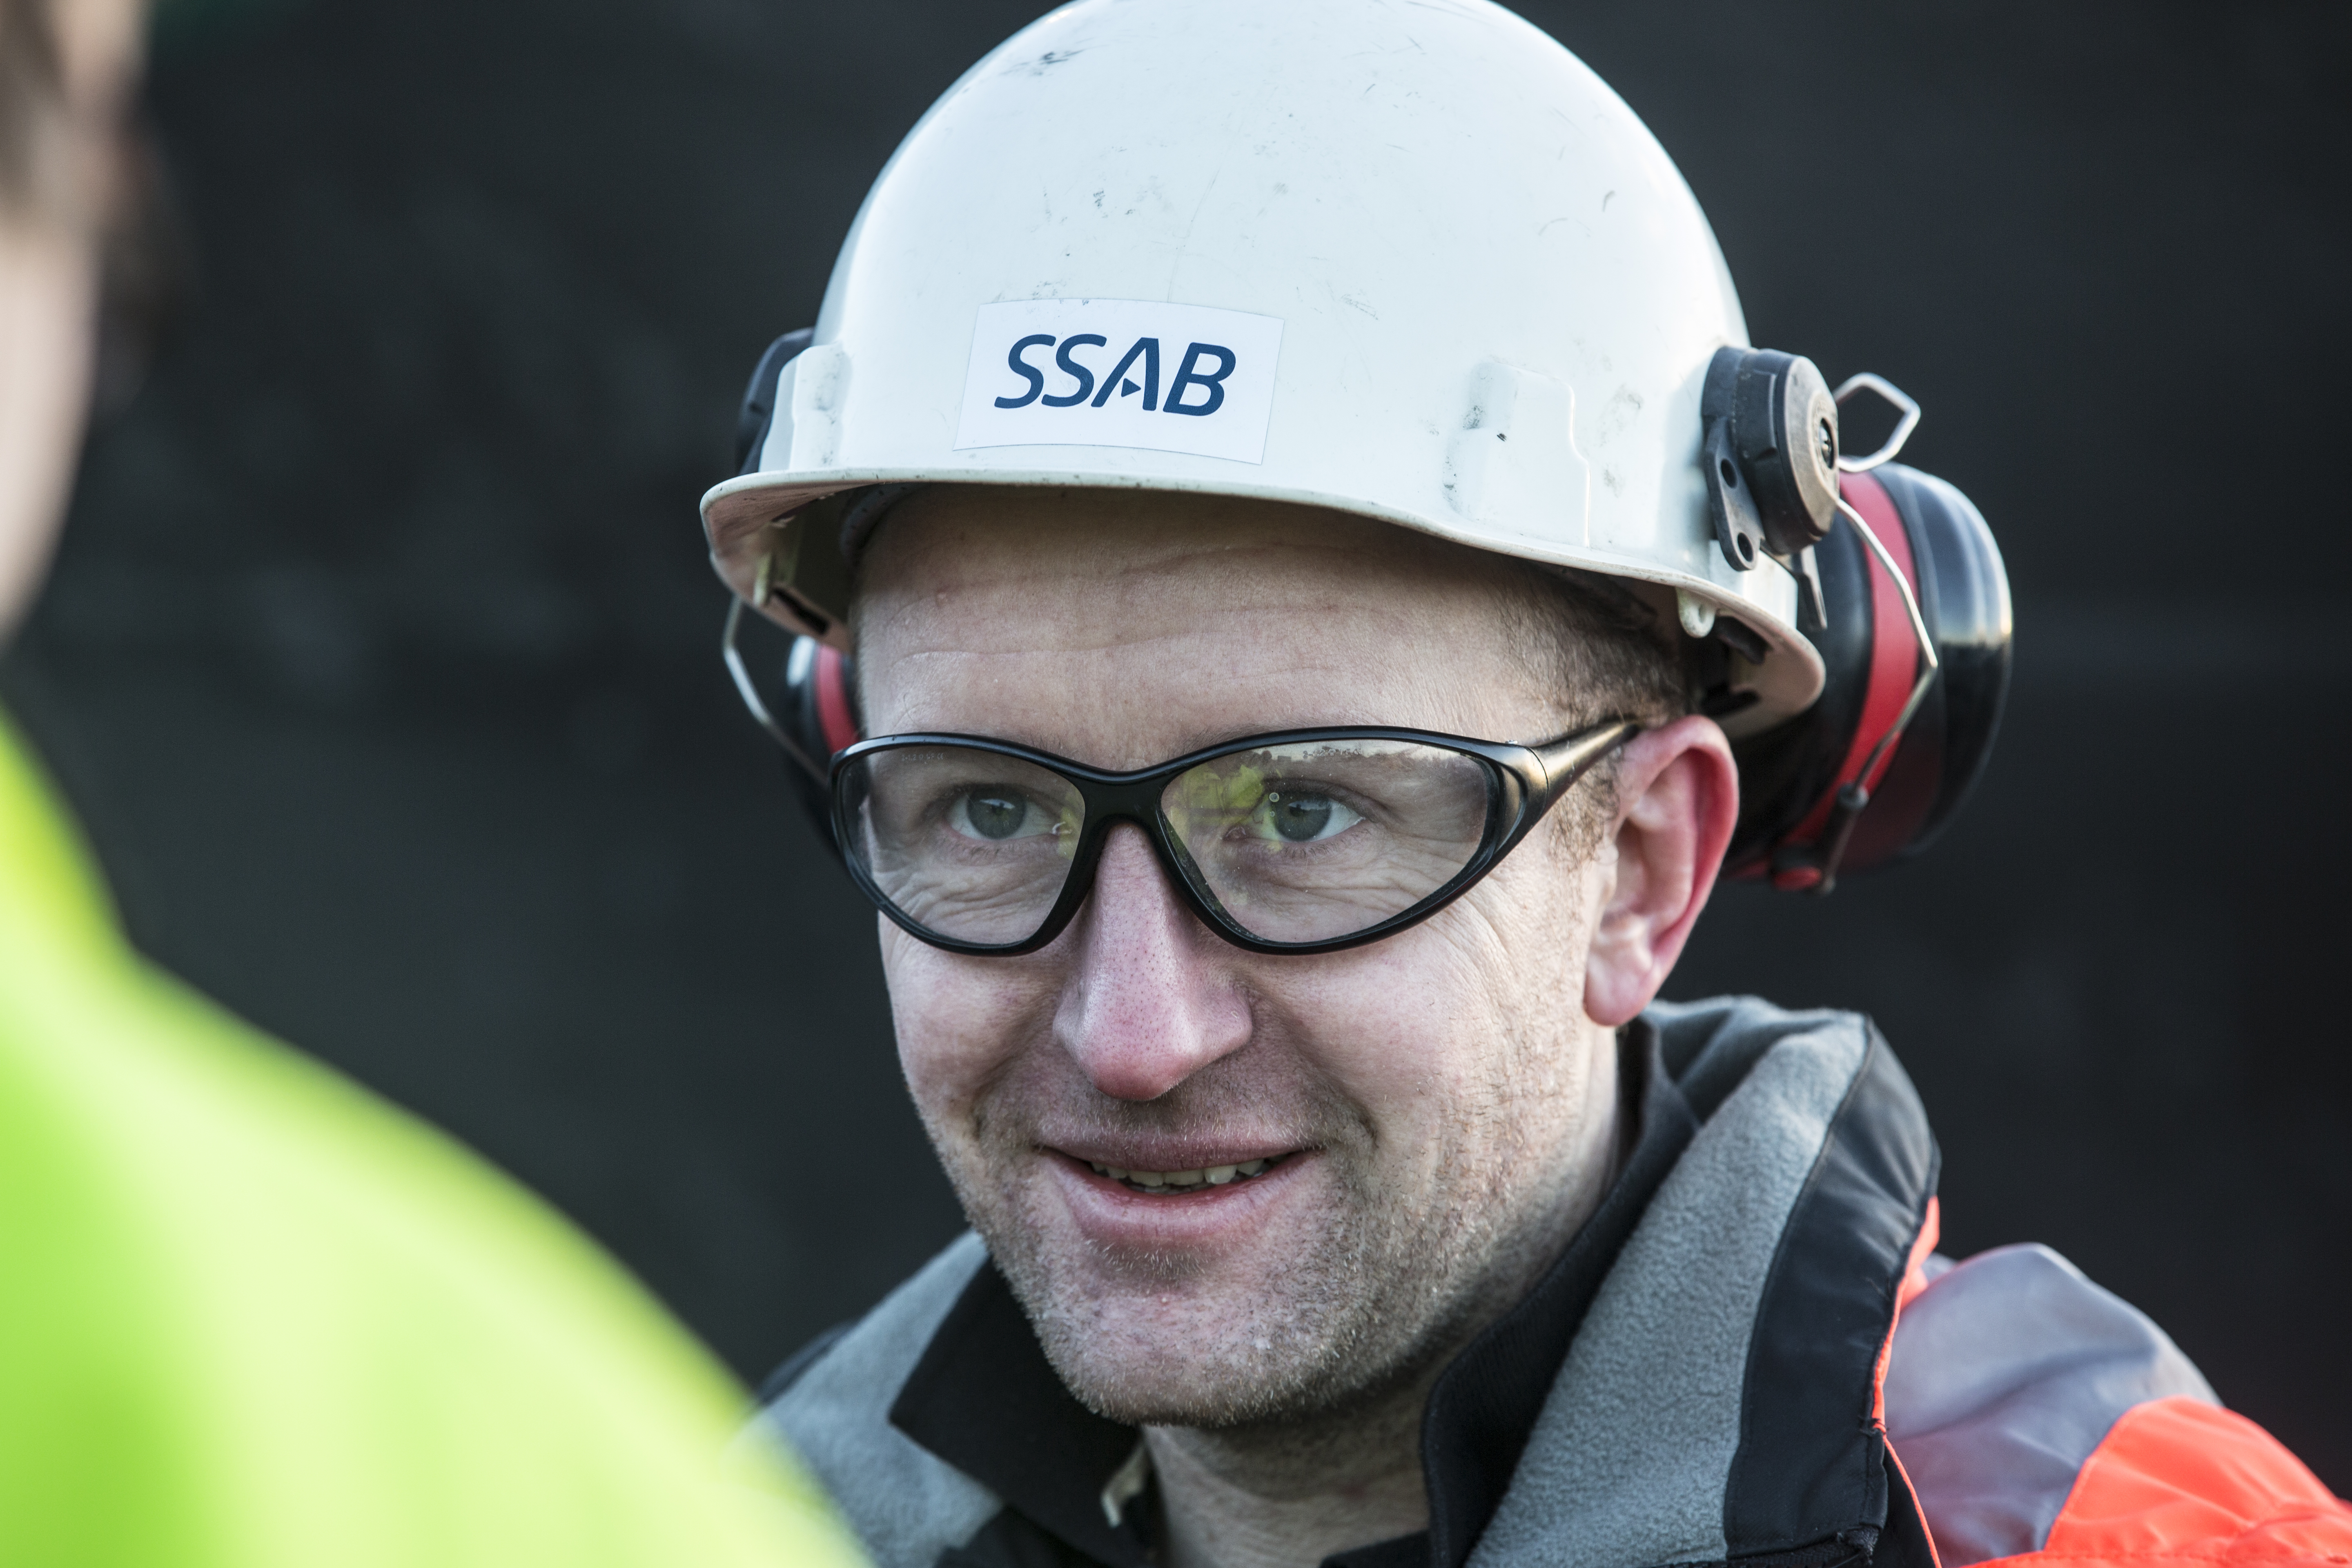 Jonas Allebert, <span>Senior Wear Specialist, SSAB Swedish Steel</span>